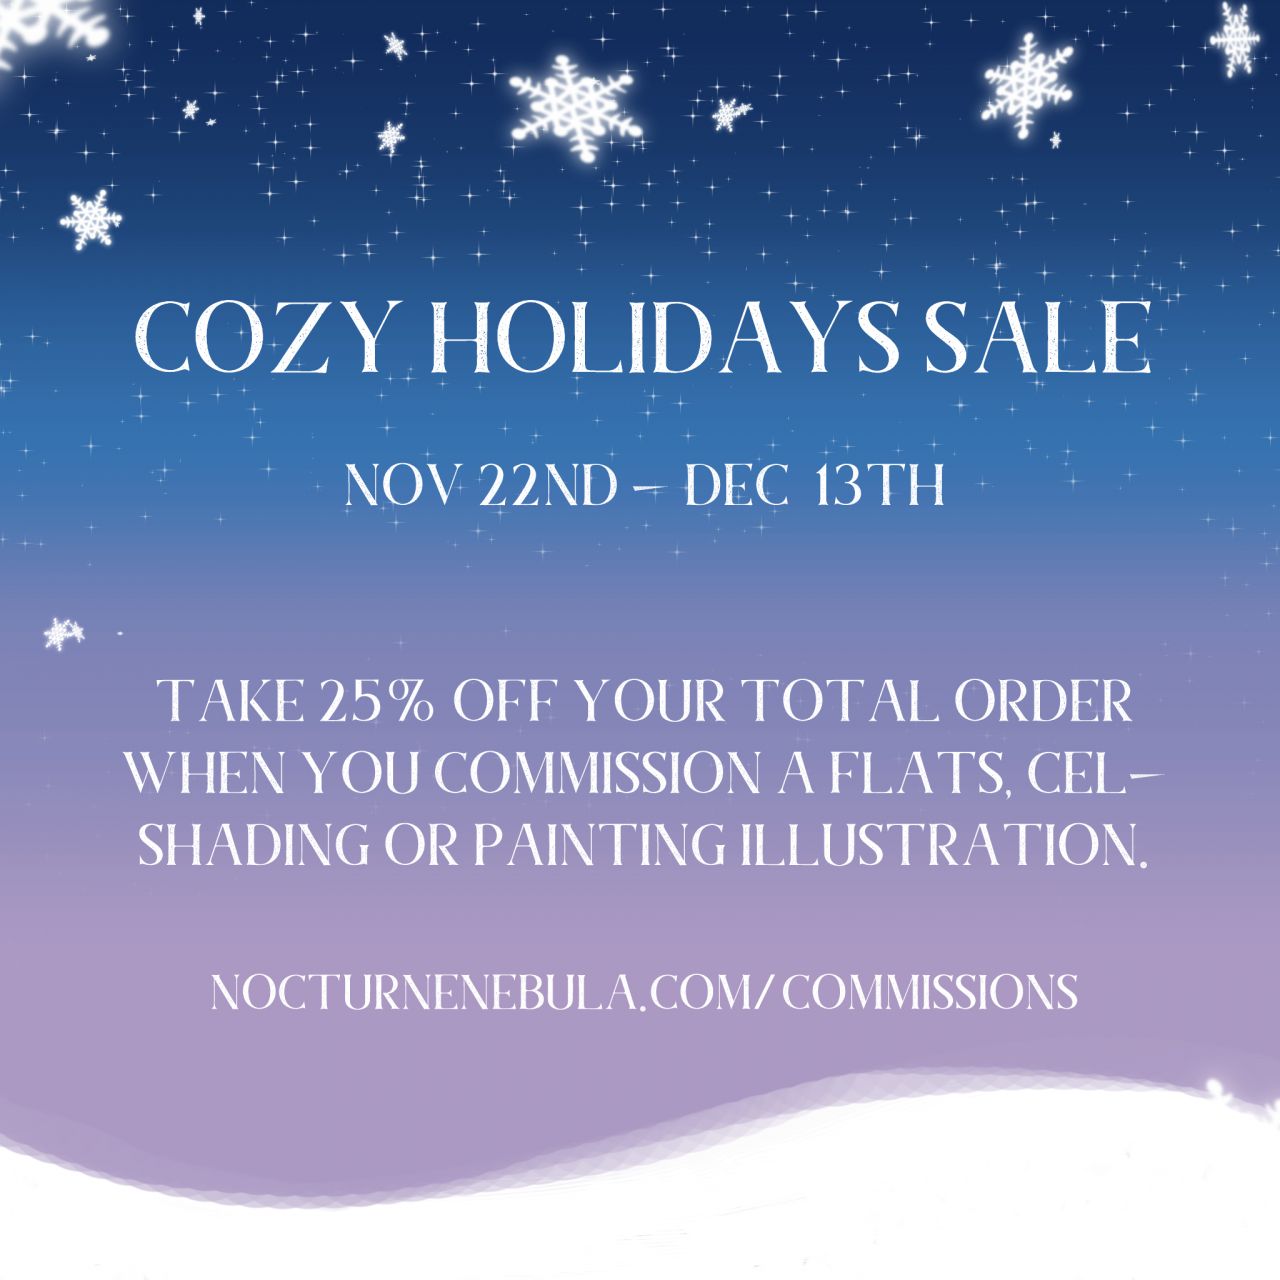 Cozy Holidays Sale Ad